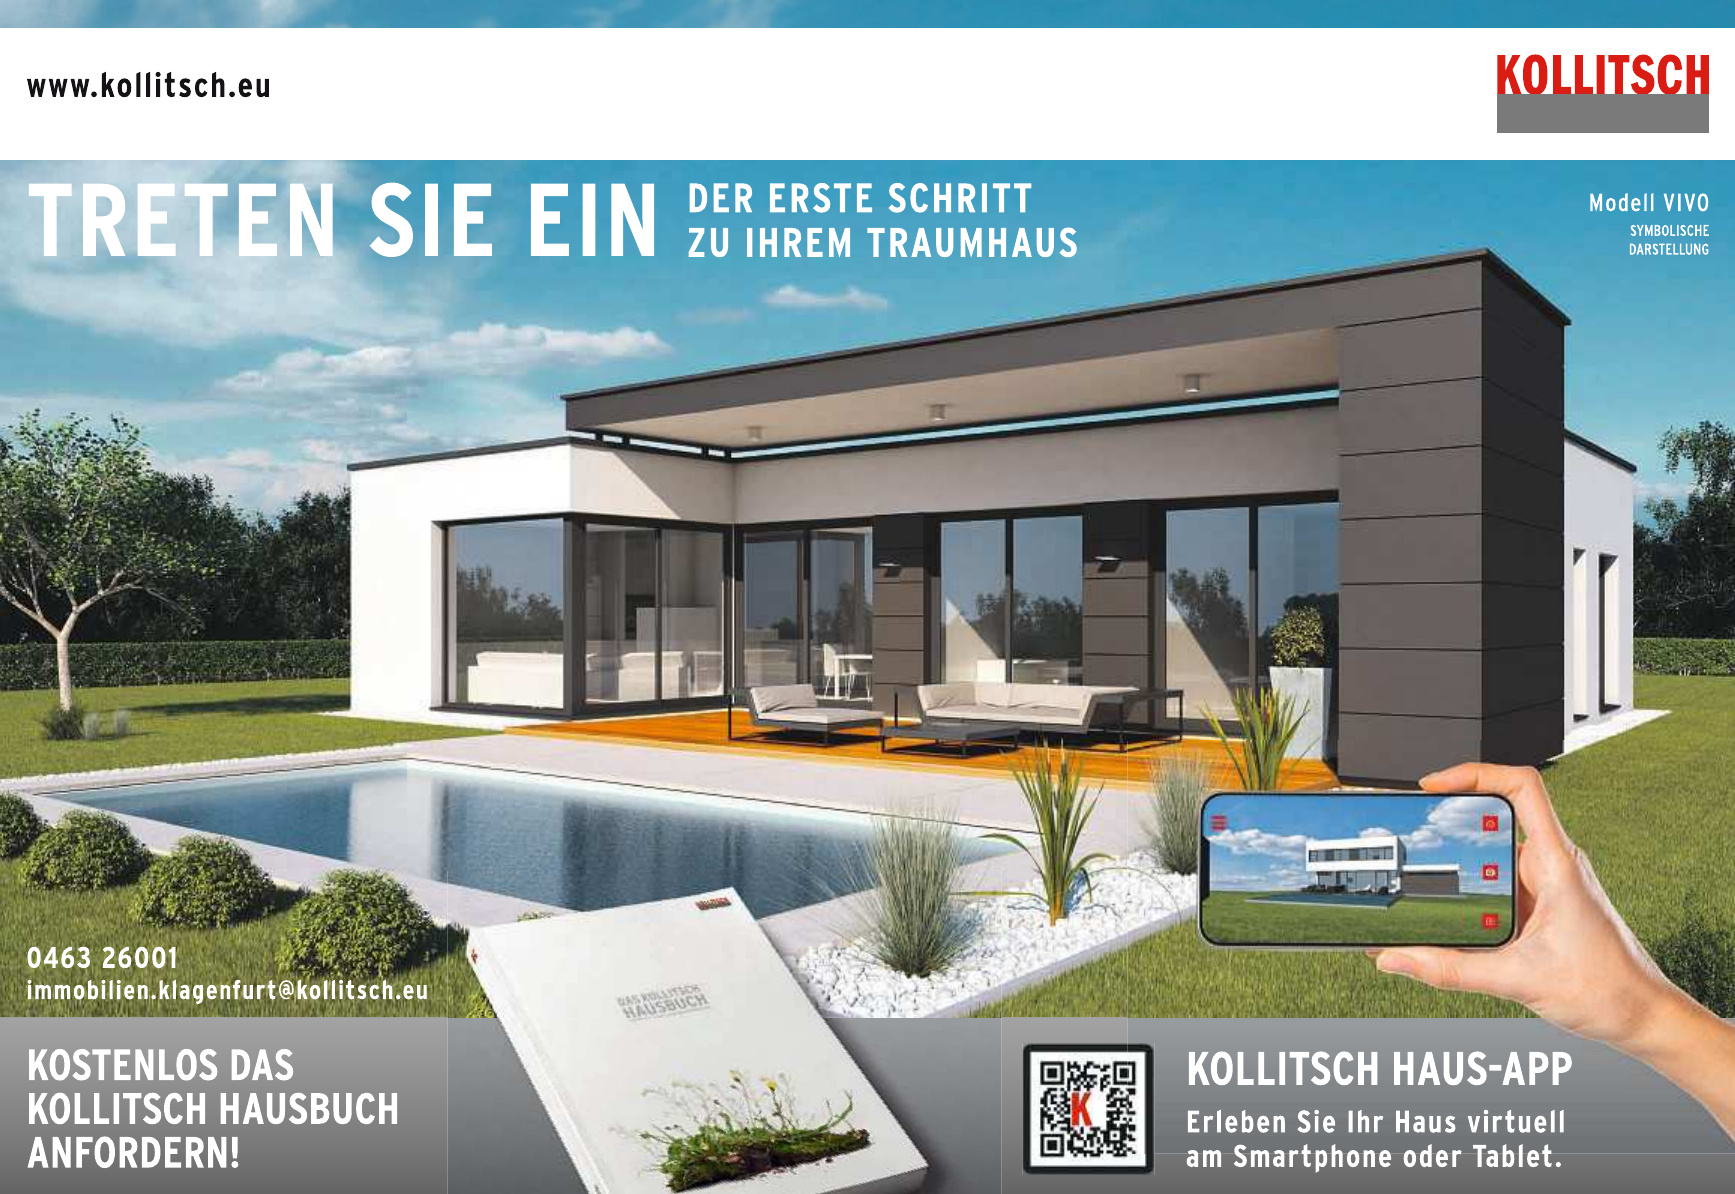 Kollitsch Immobilien GmbH